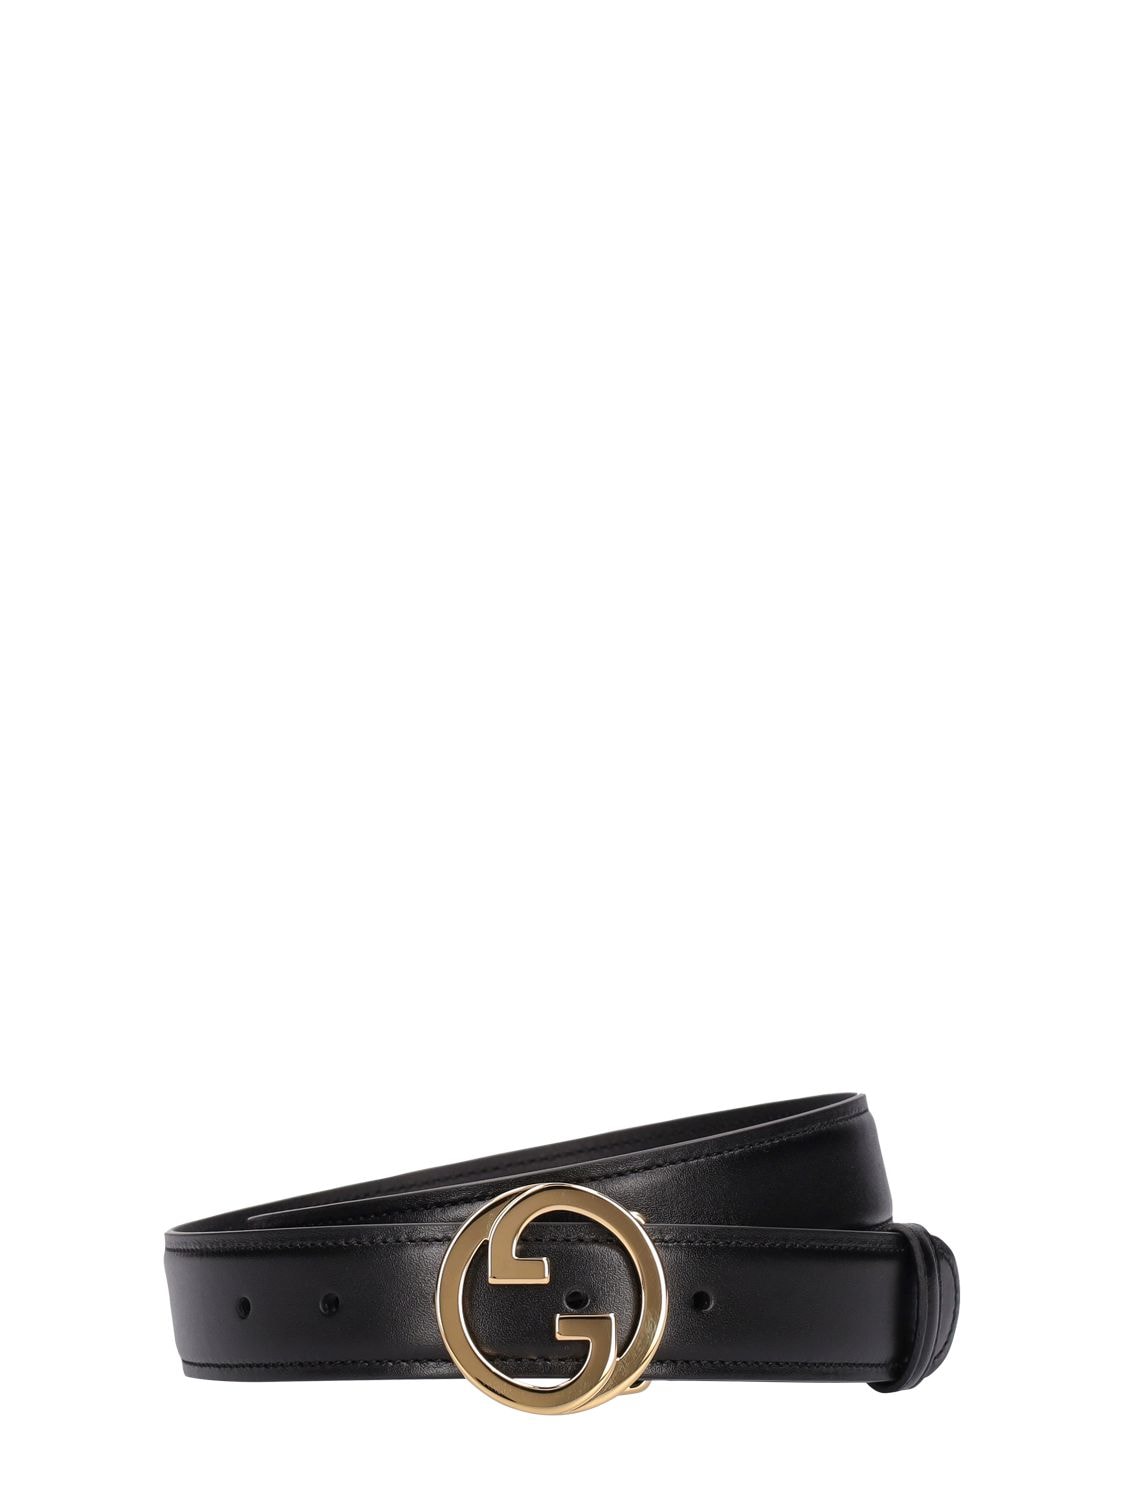 3cm New Blondie Leather Belt